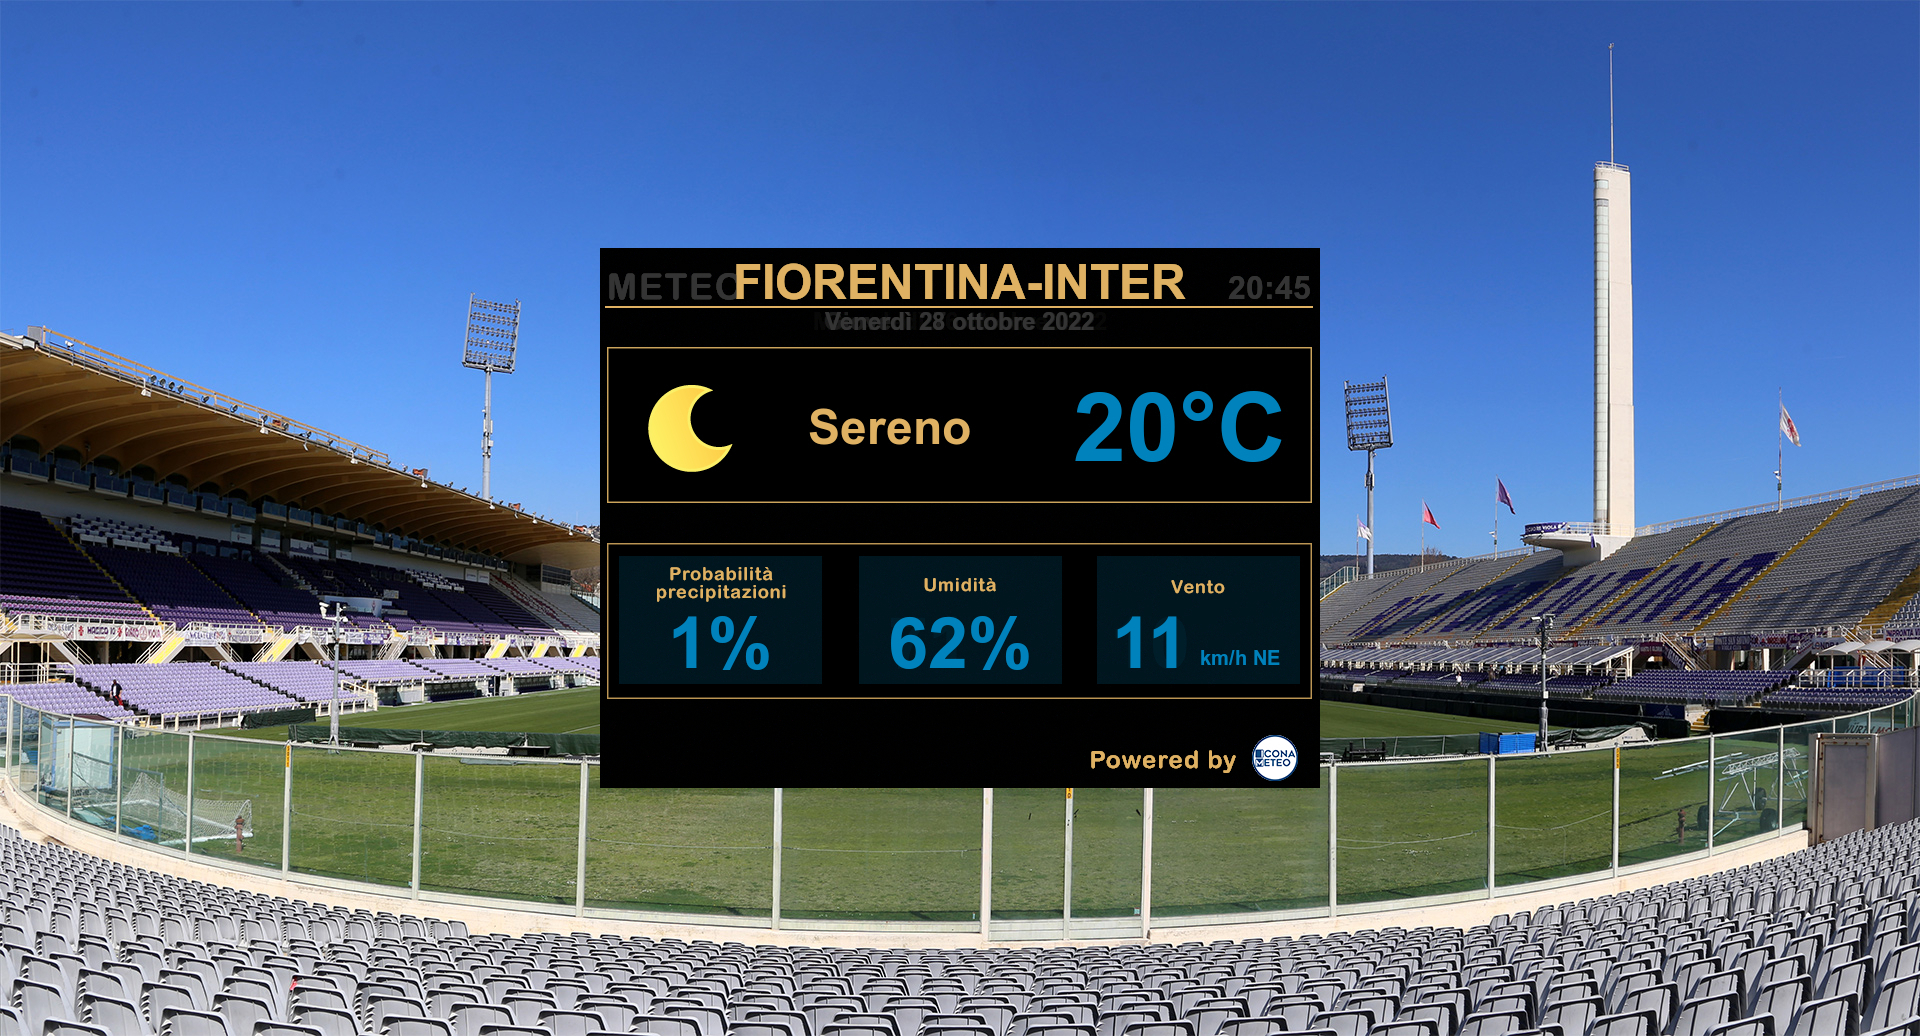 Meteo Fiorentina-Inter- Previsioni (Powered by Icona Meteo)